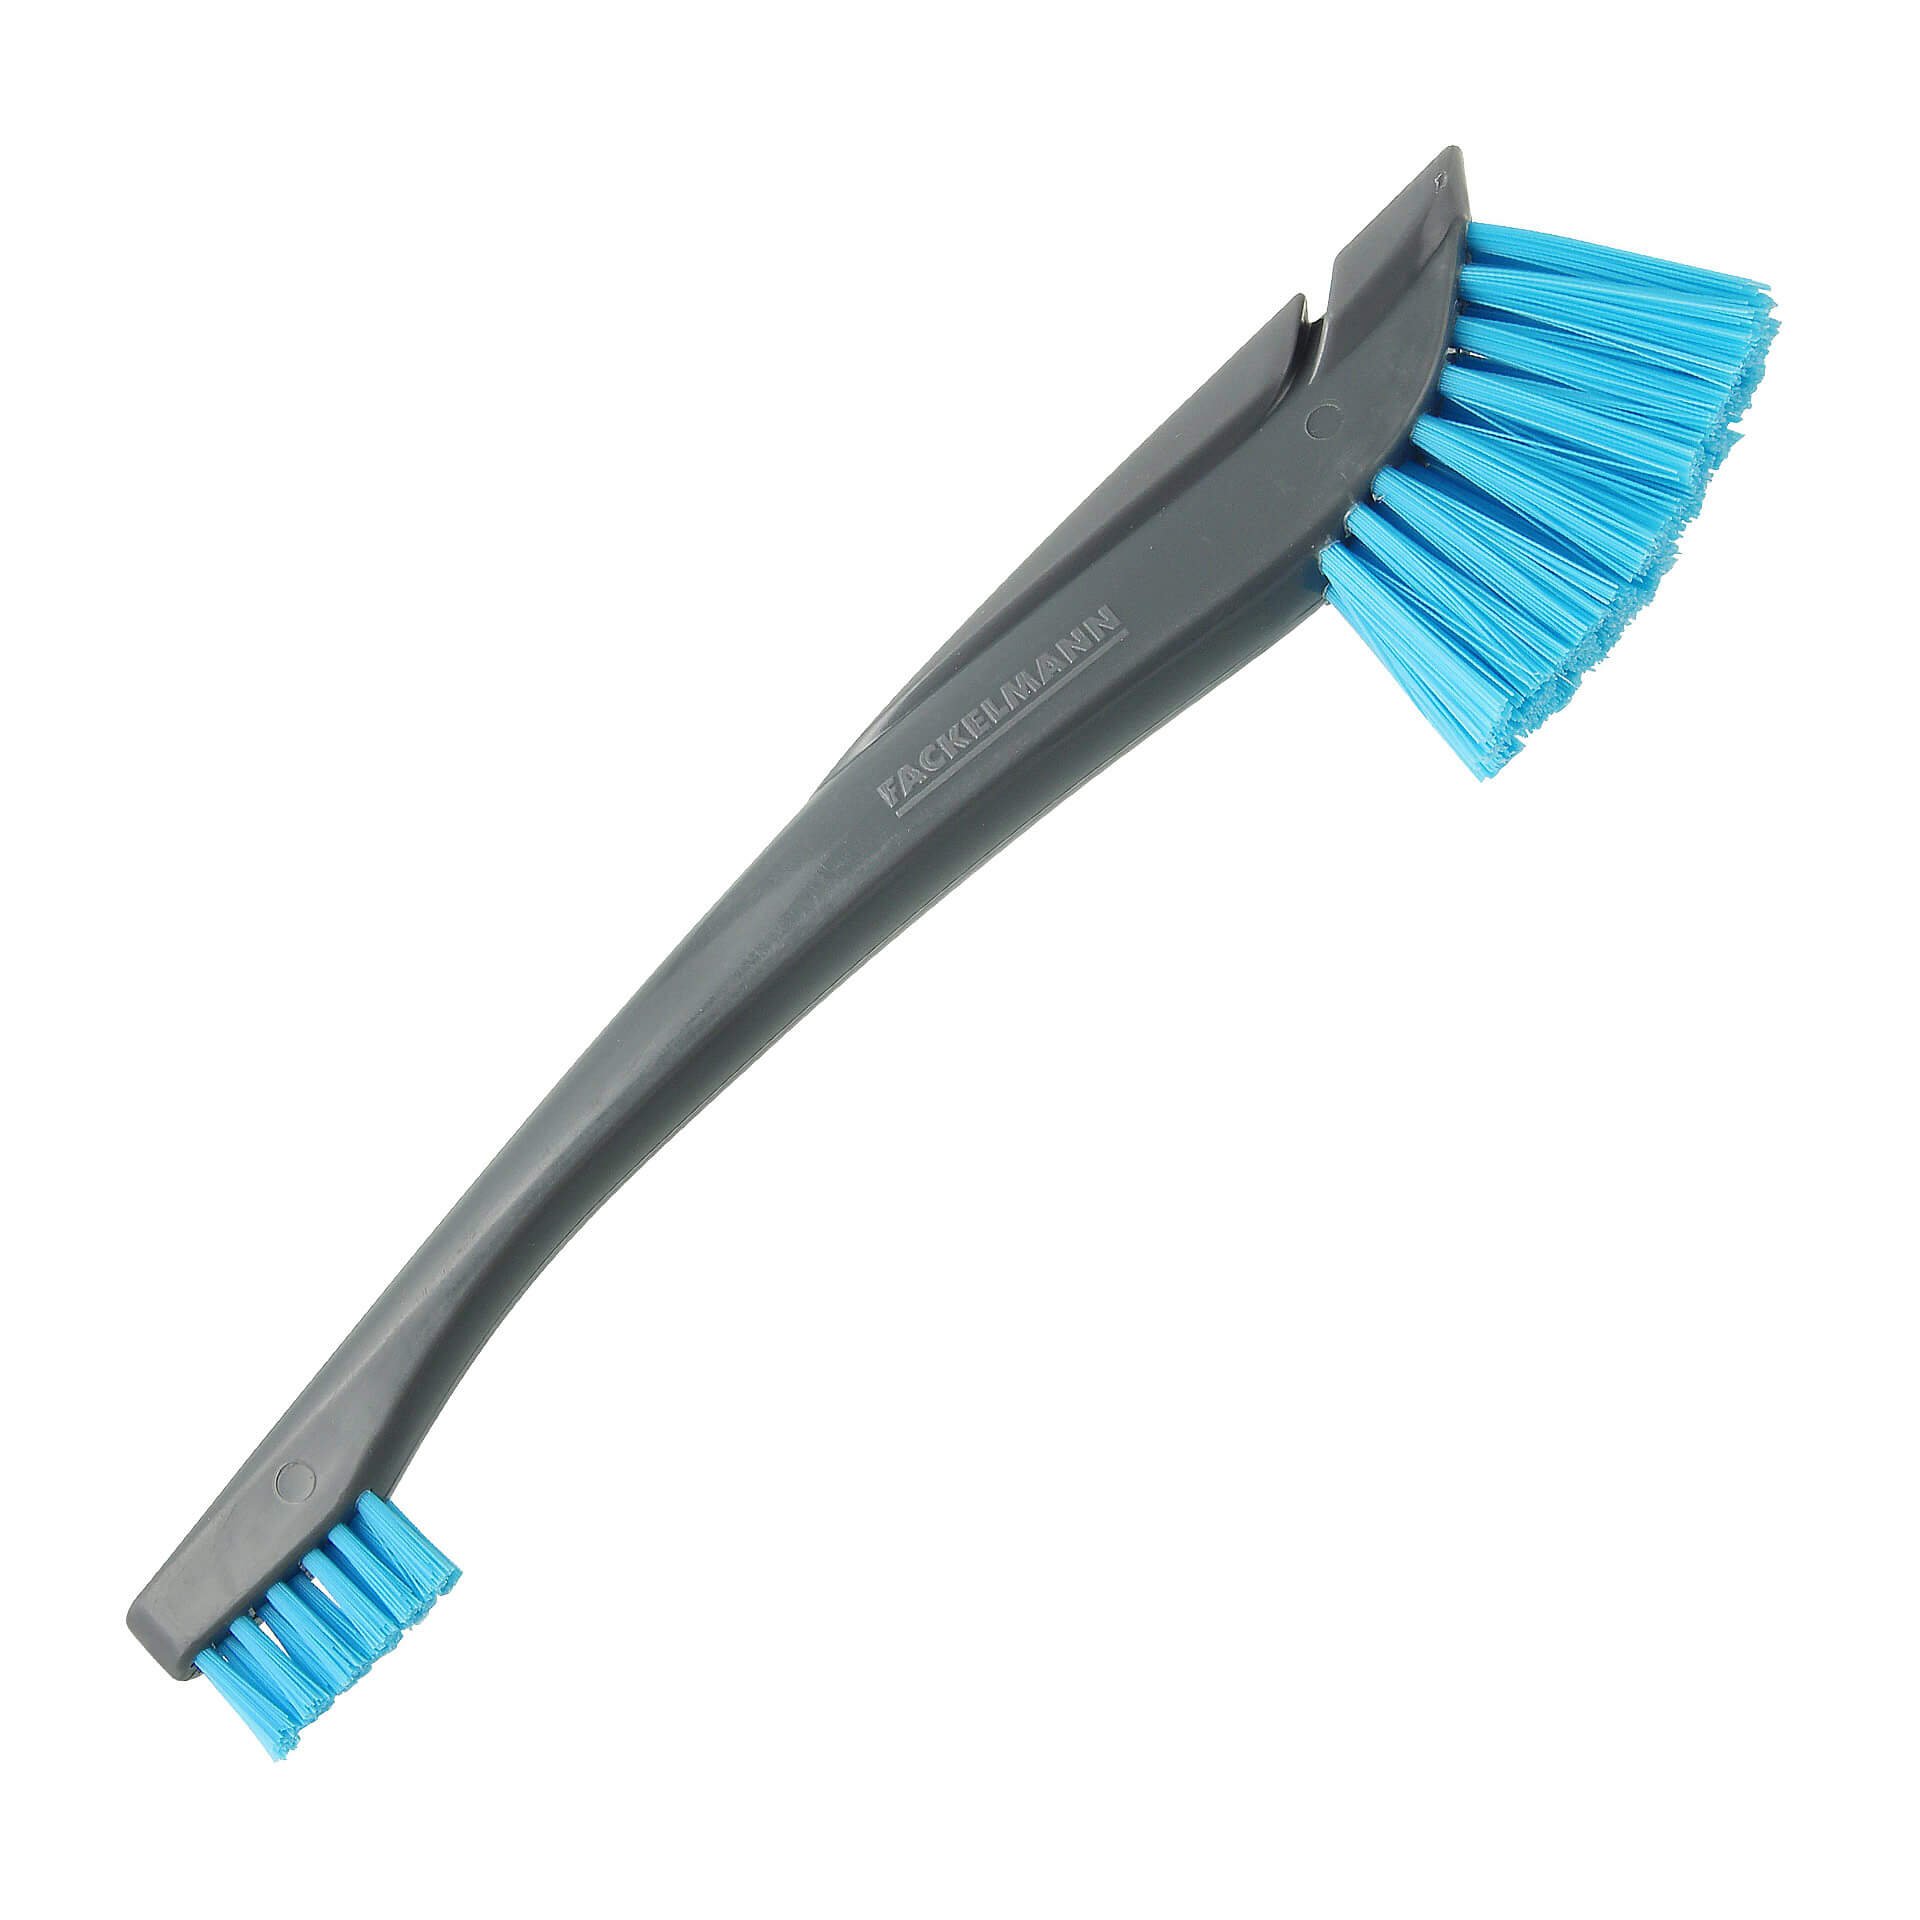 2in1 spazzola in plastica dura, ideale per fughe e piccole superfici